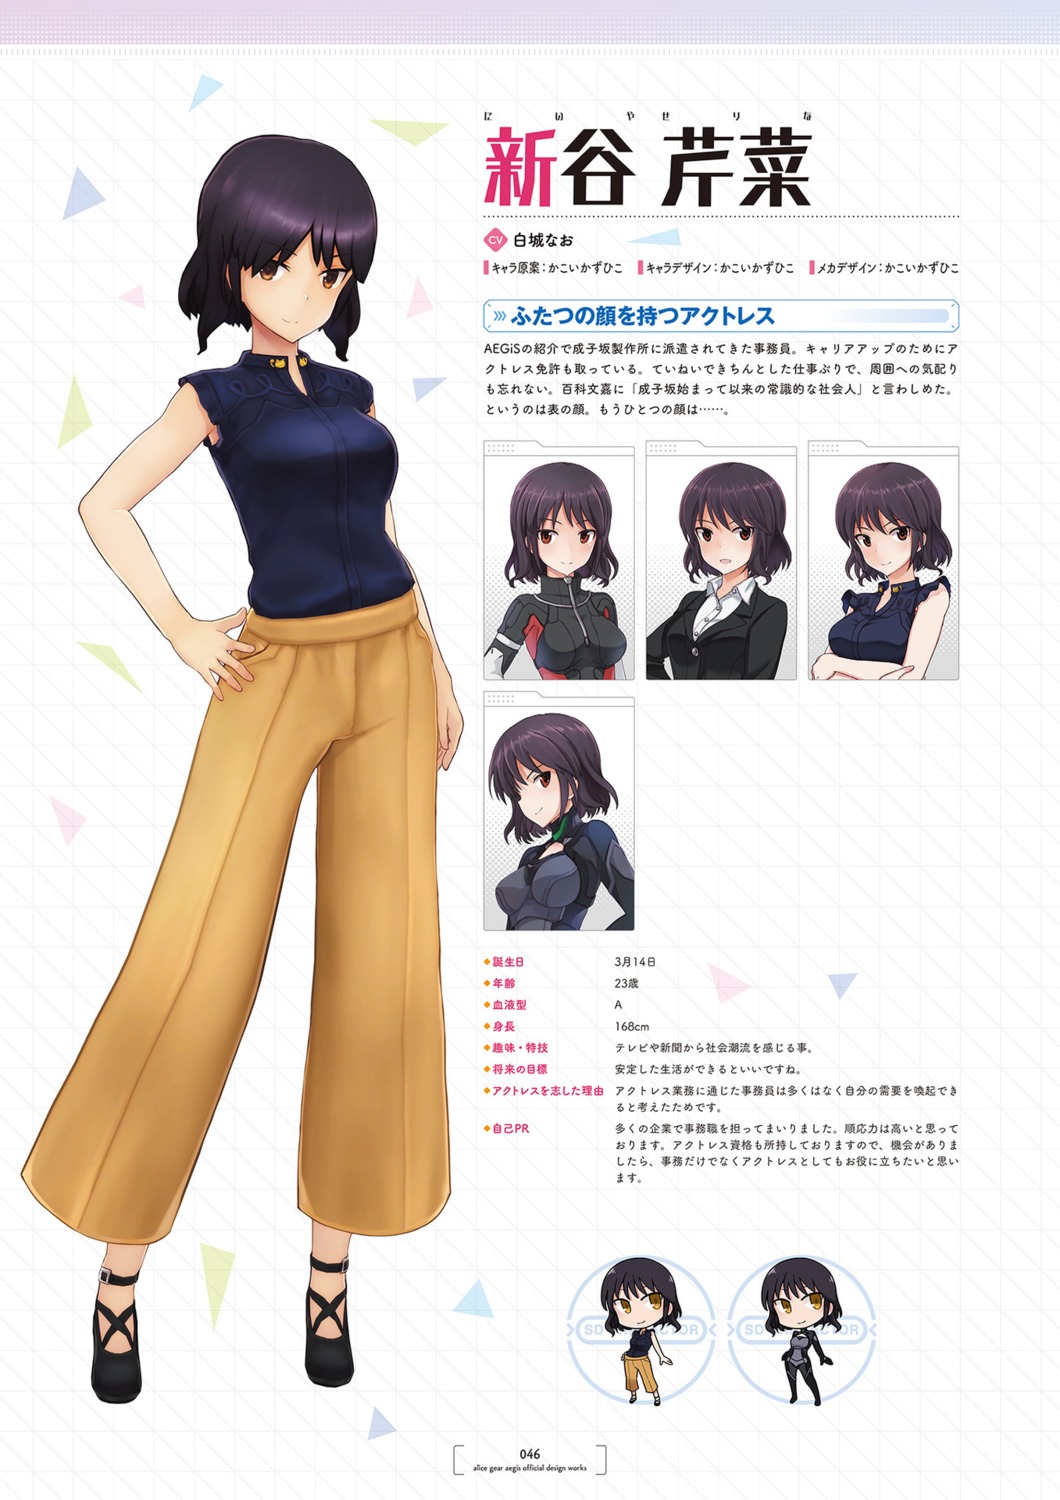 Kakoi Kazuhiko Alice Gear Aegis Niiya Serina Breast Hold Business Suit Character Design Chibi 5119 Yande Re